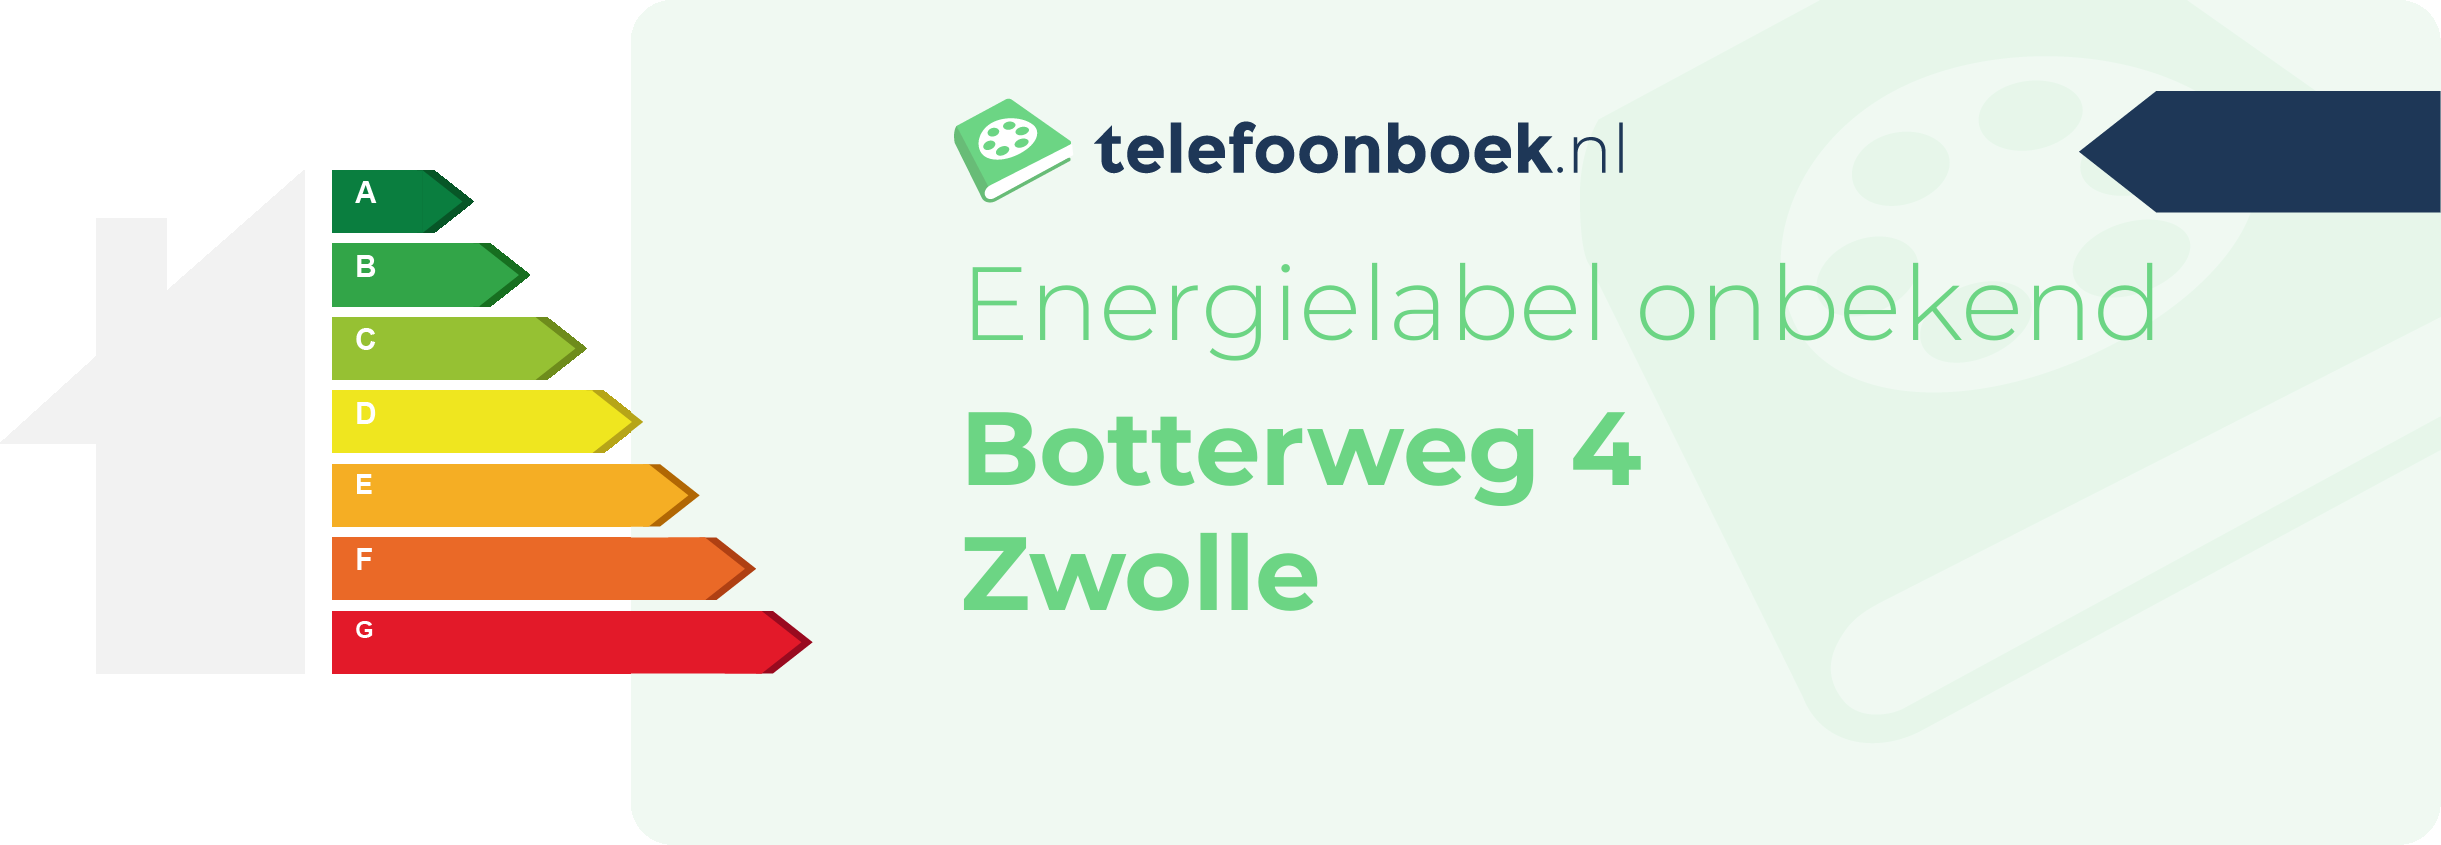 Energielabel Botterweg 4 Zwolle